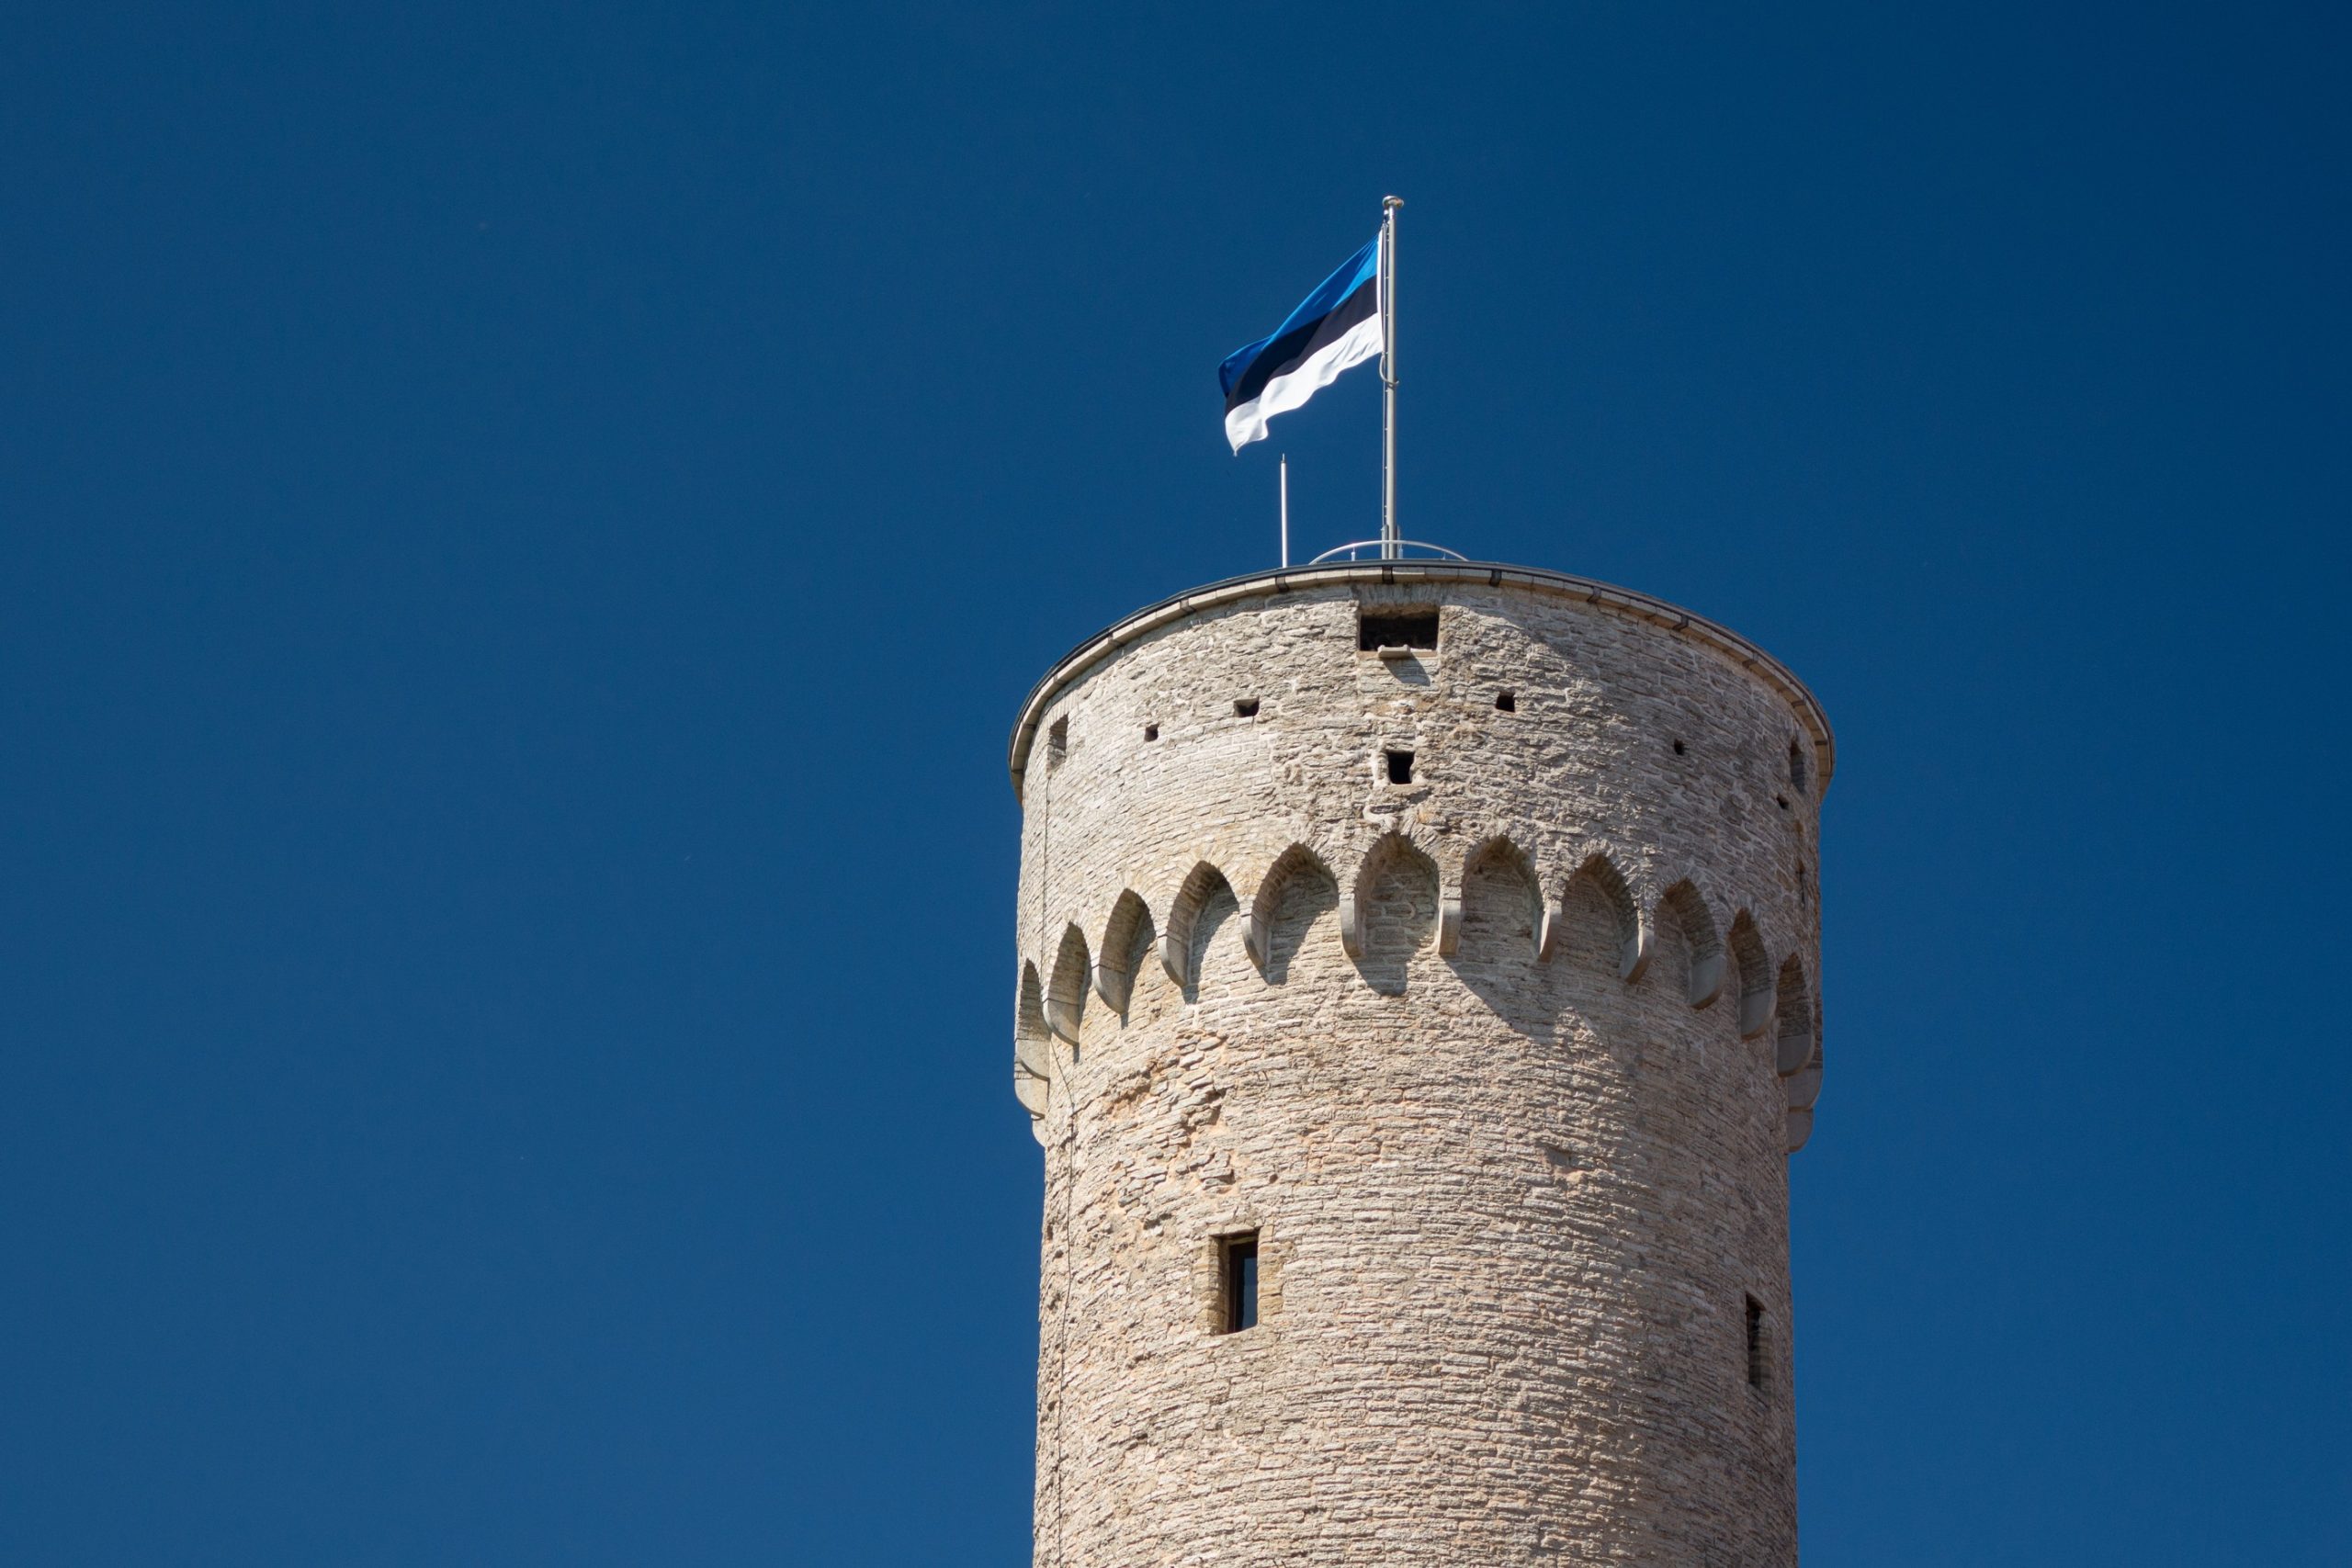 Estland, Turm in Tallin